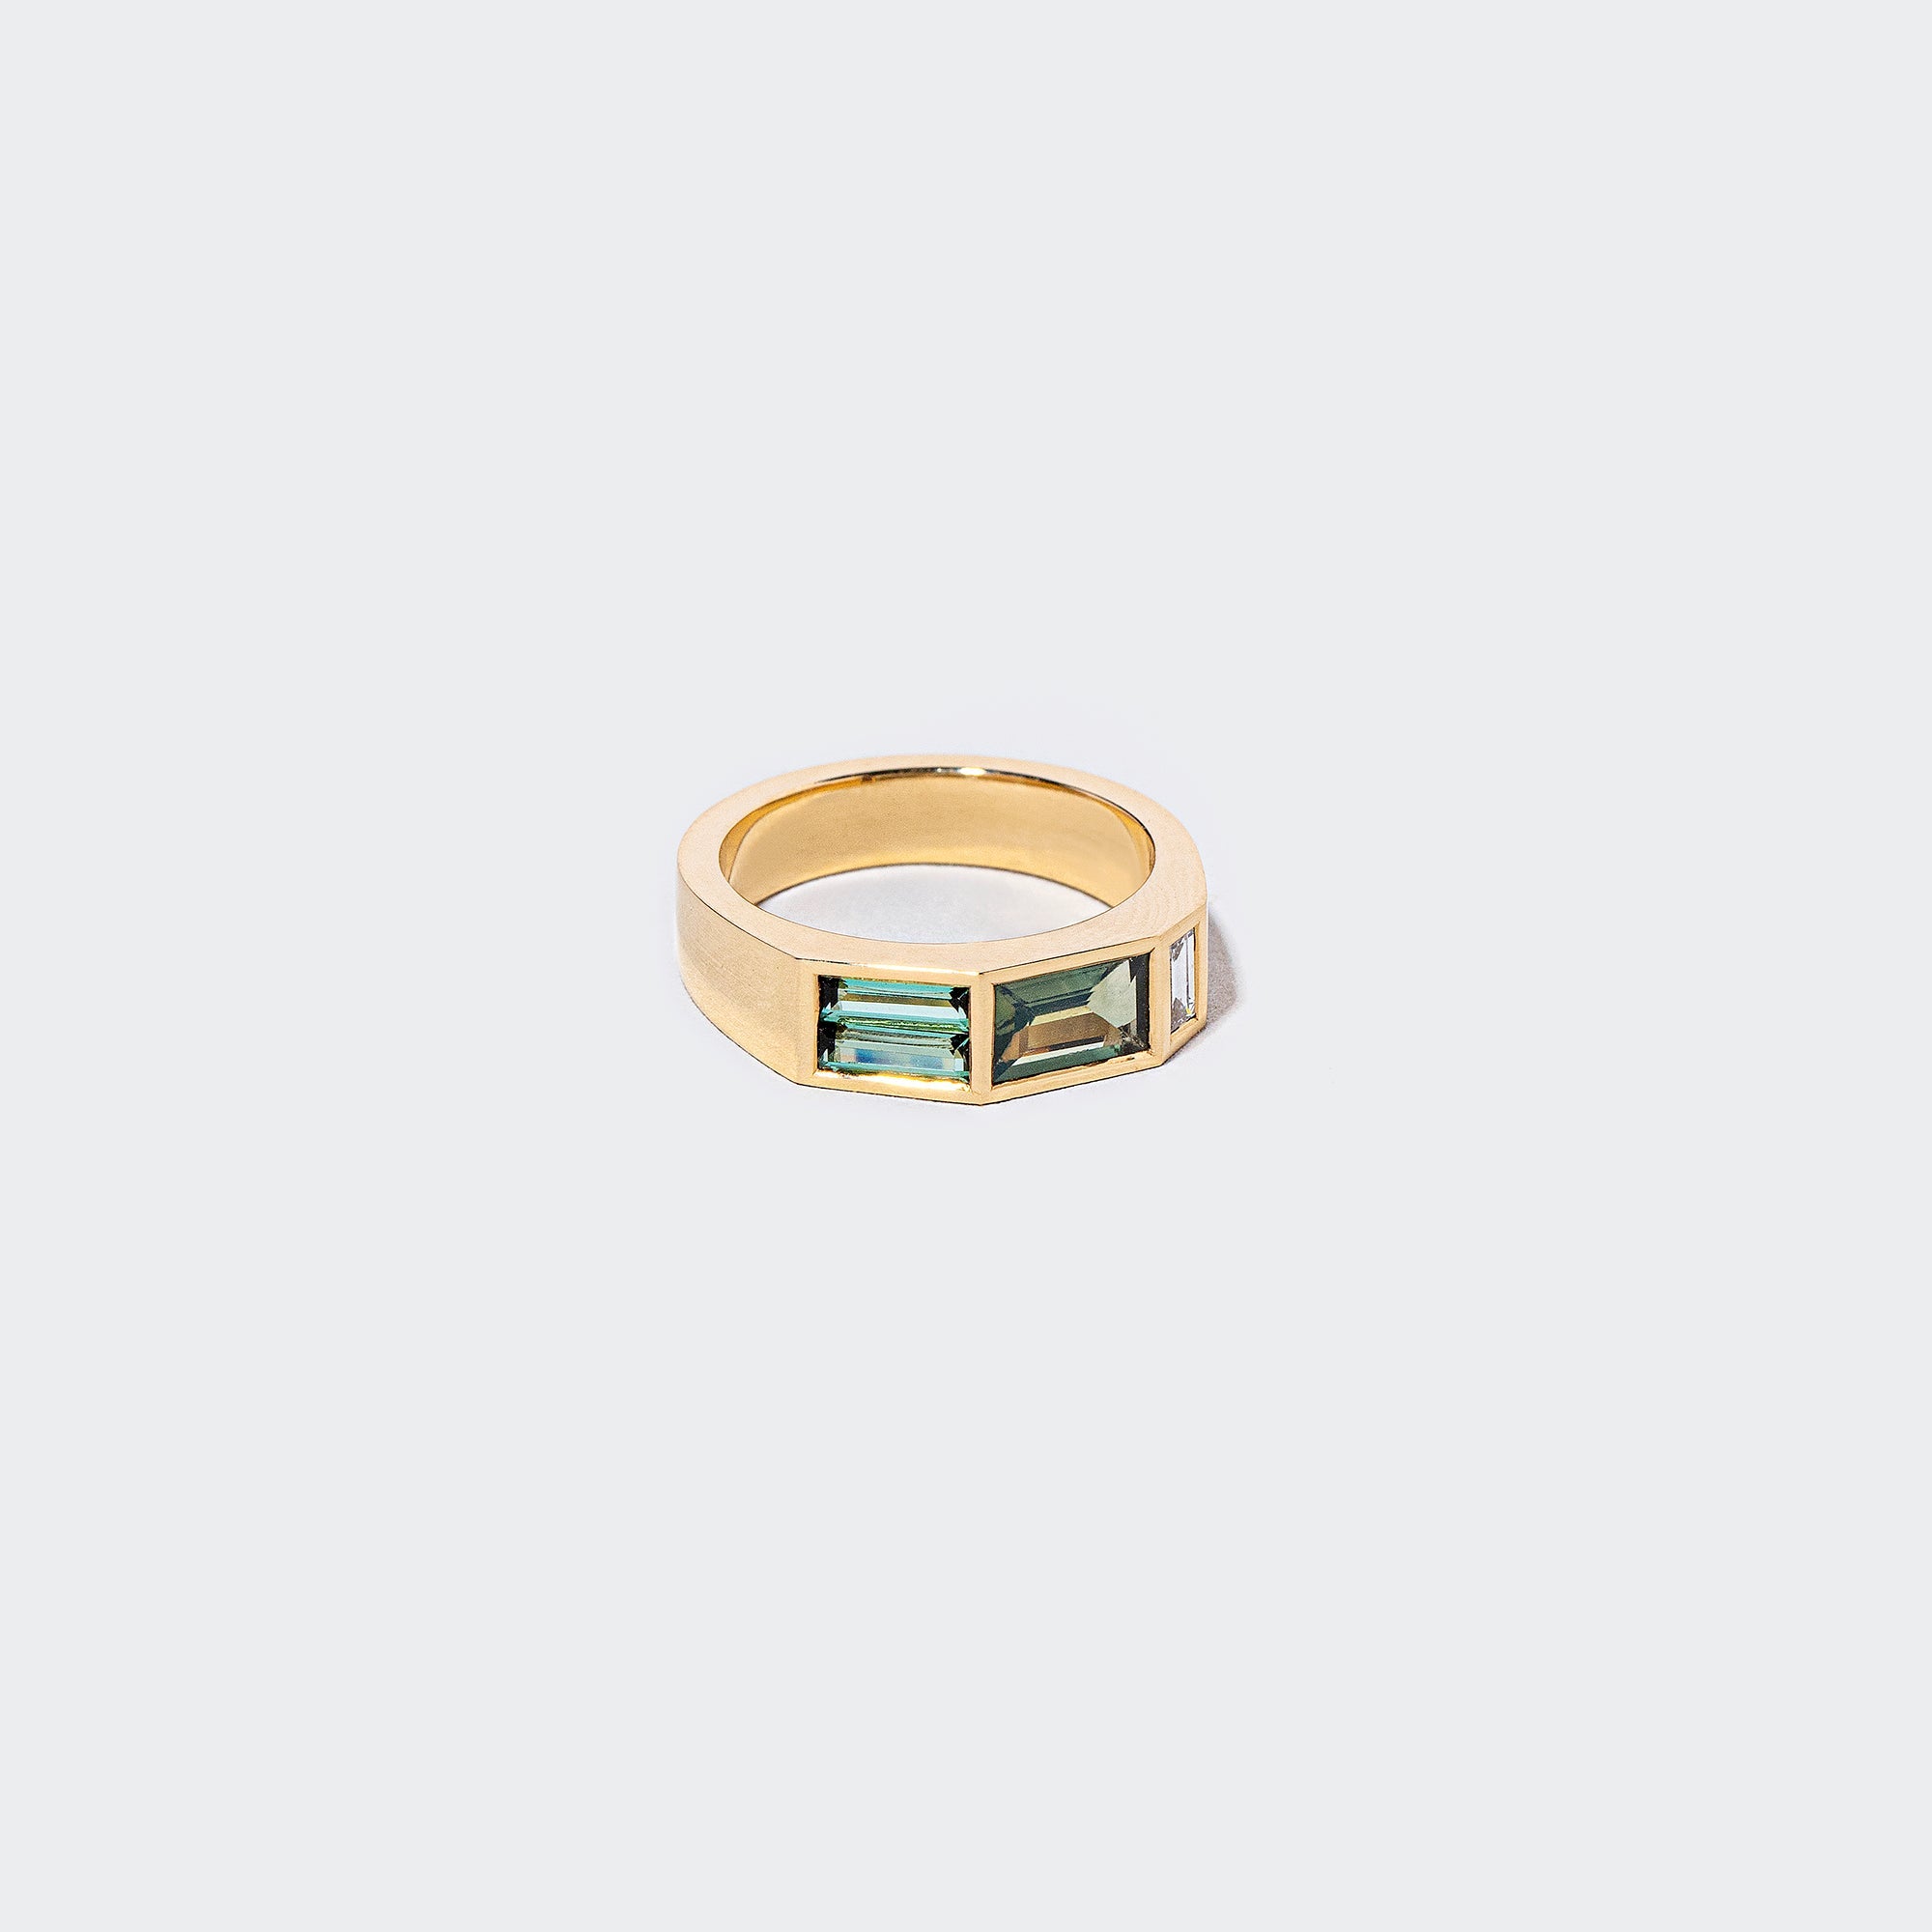 product_details:: Hanlon's Ring on light color background.